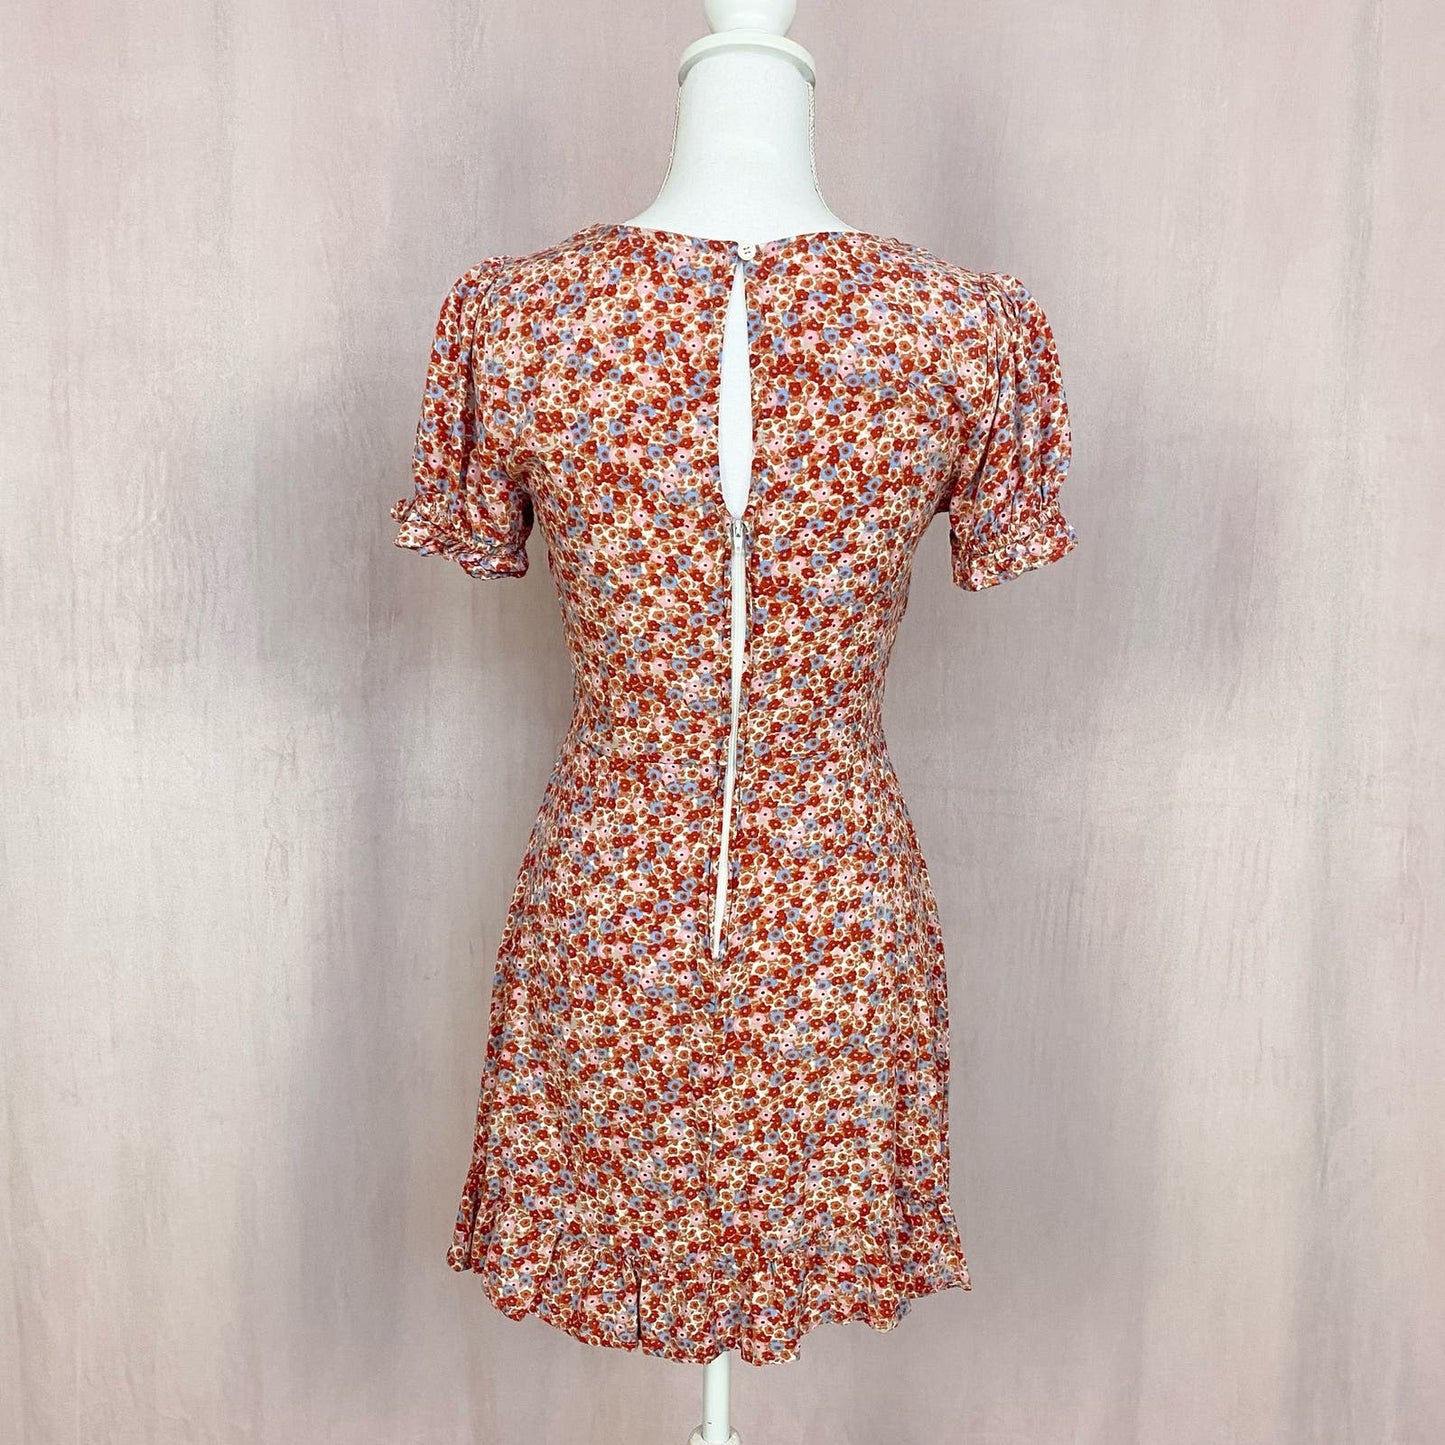 Secondhand Francesca’s Mandie Ditsy Floral Ruffled Mini Dress, Size Medium